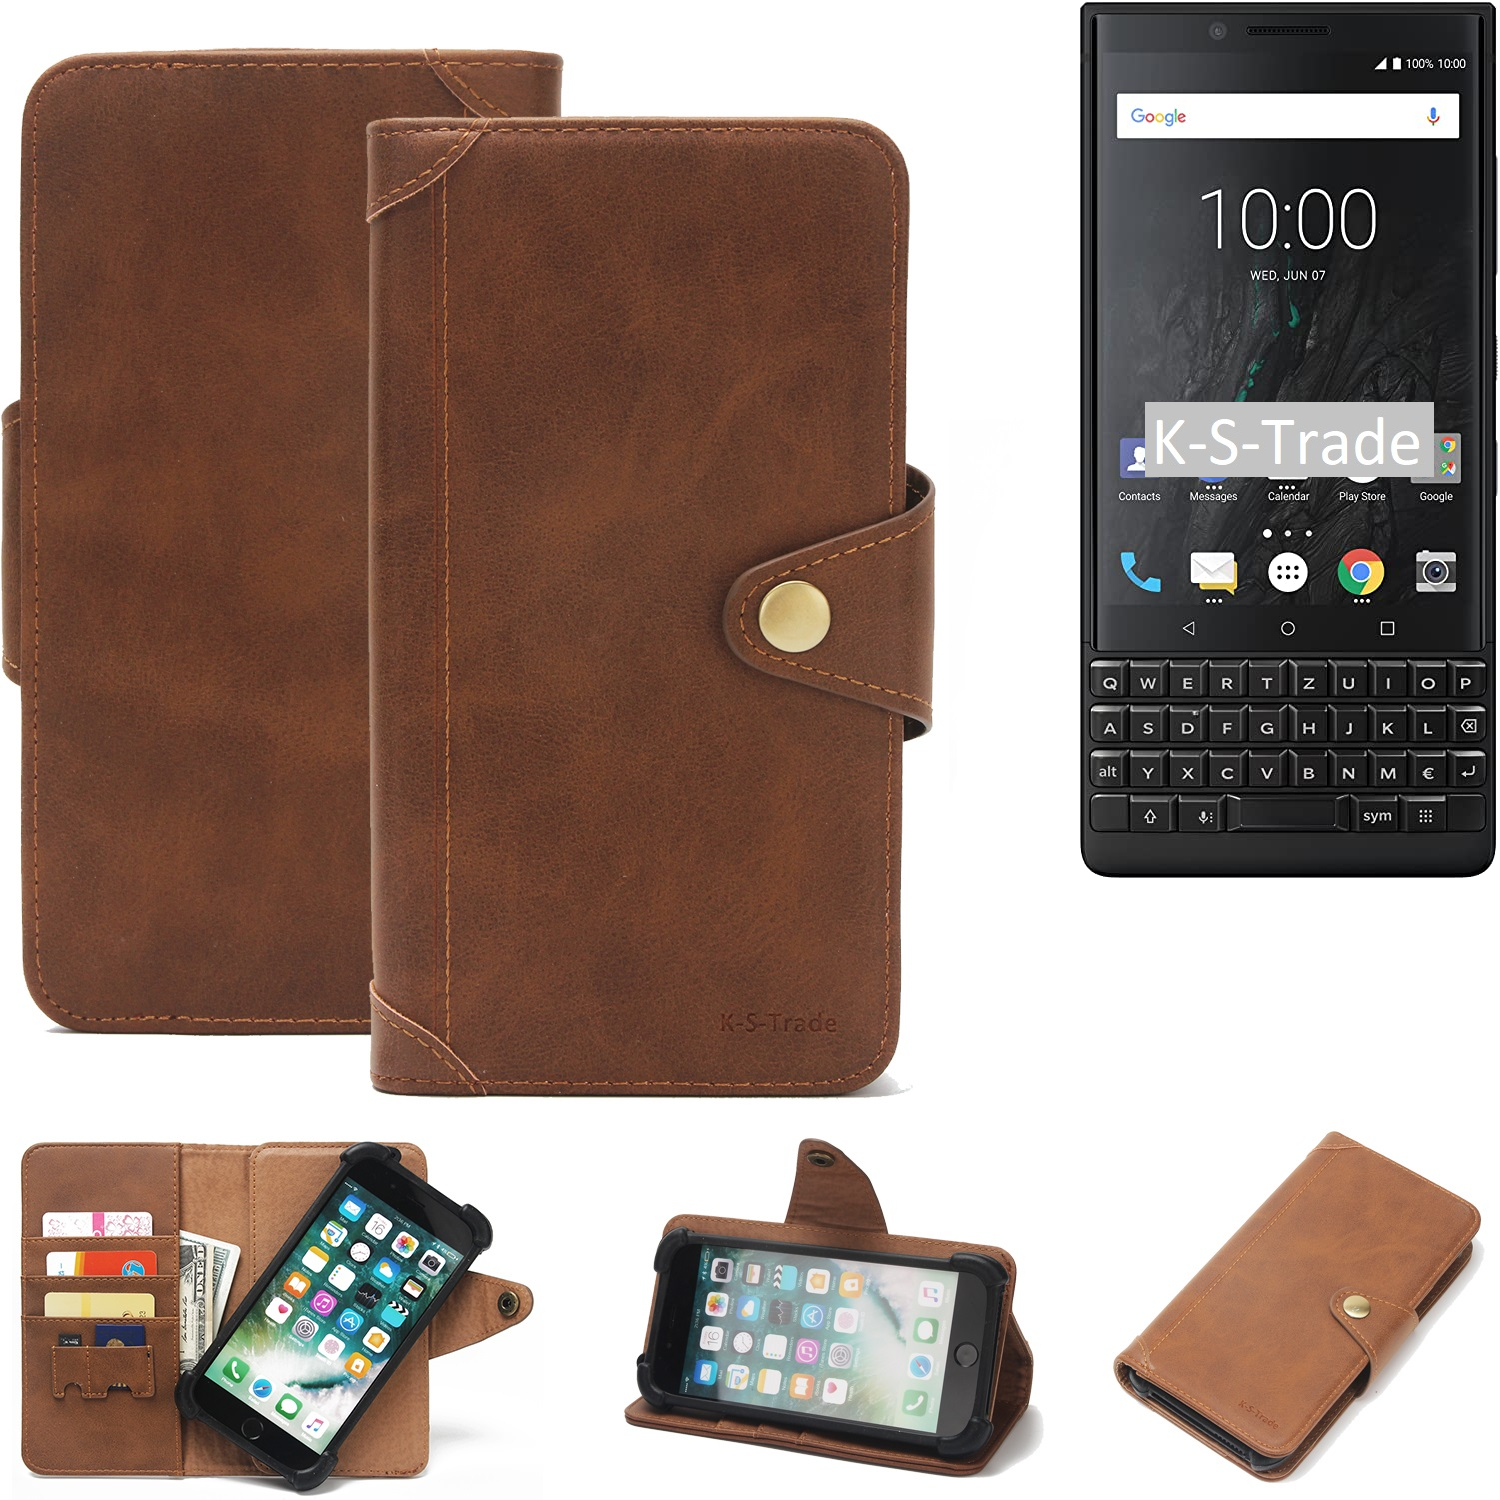 Bookcover, K-S-TRADE (Dual-SIM), Schutzhülle, KEY2 braun Blackberry,